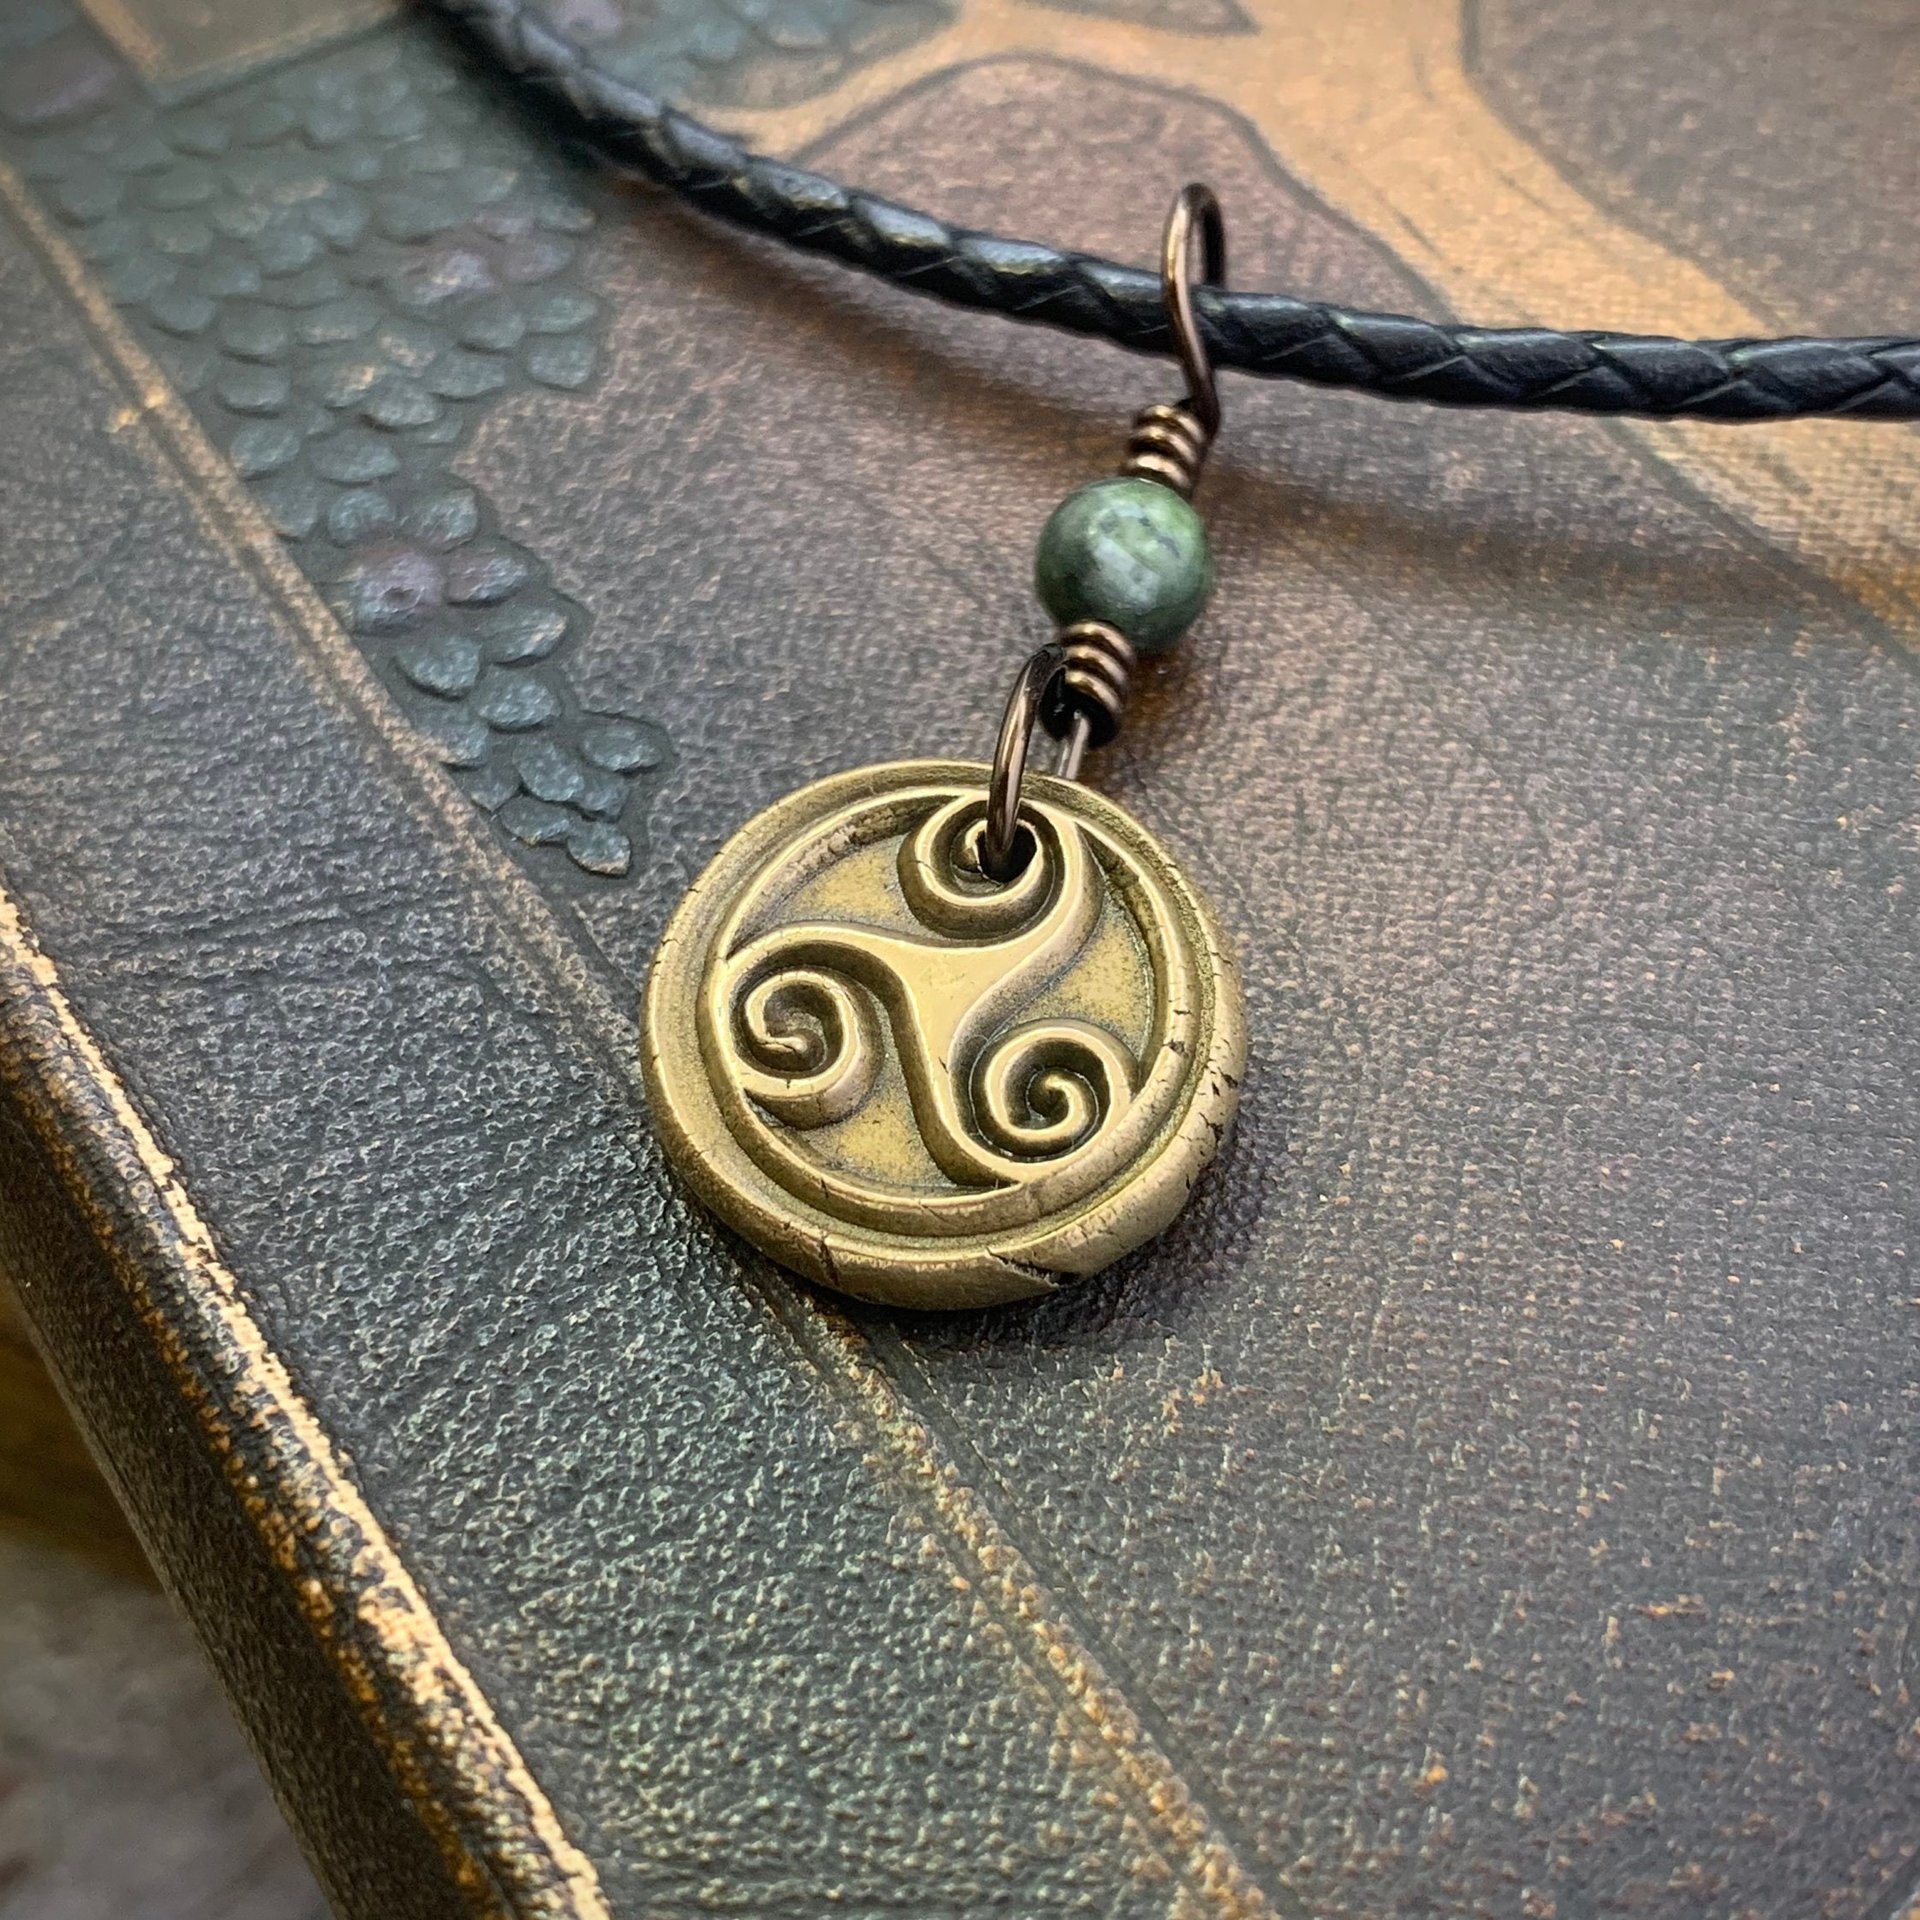 Triskele Bronze Necklace, Connemara Marble, Wax Seal Charm, Irish Celtic Symbols, Triple Spiral, Triskelion, Pagan Jewelry, 8th Anniversary